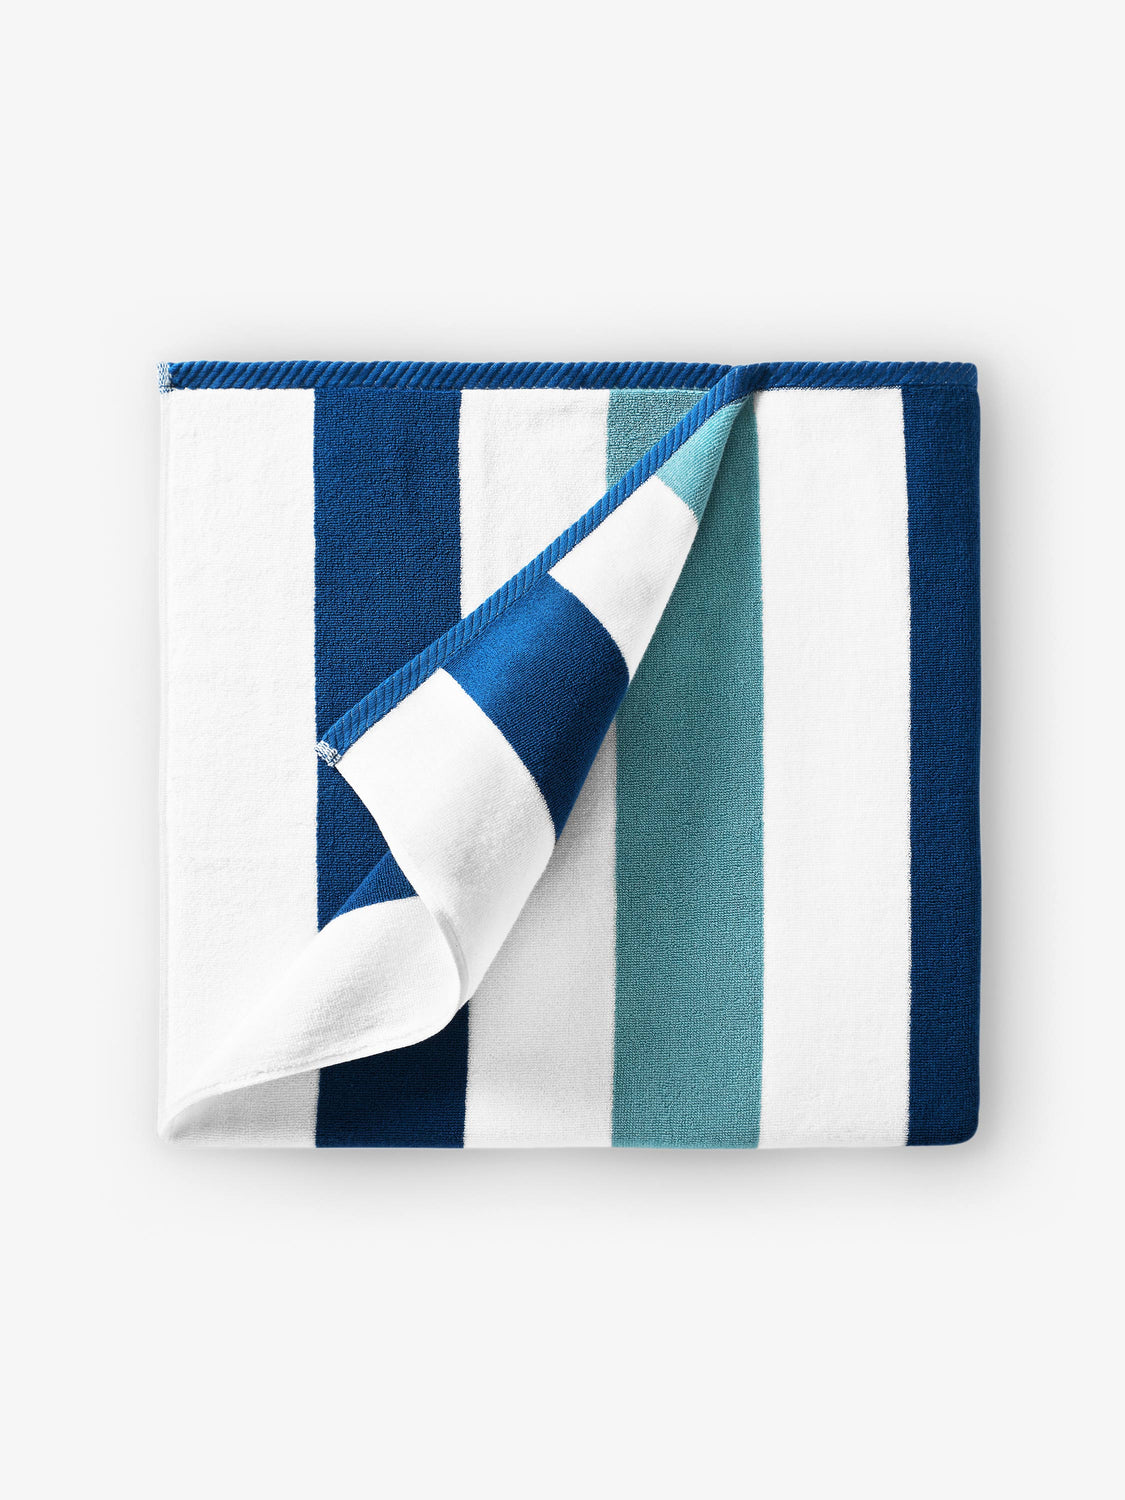 A folded blue, green, and white striped cabana beach towel.